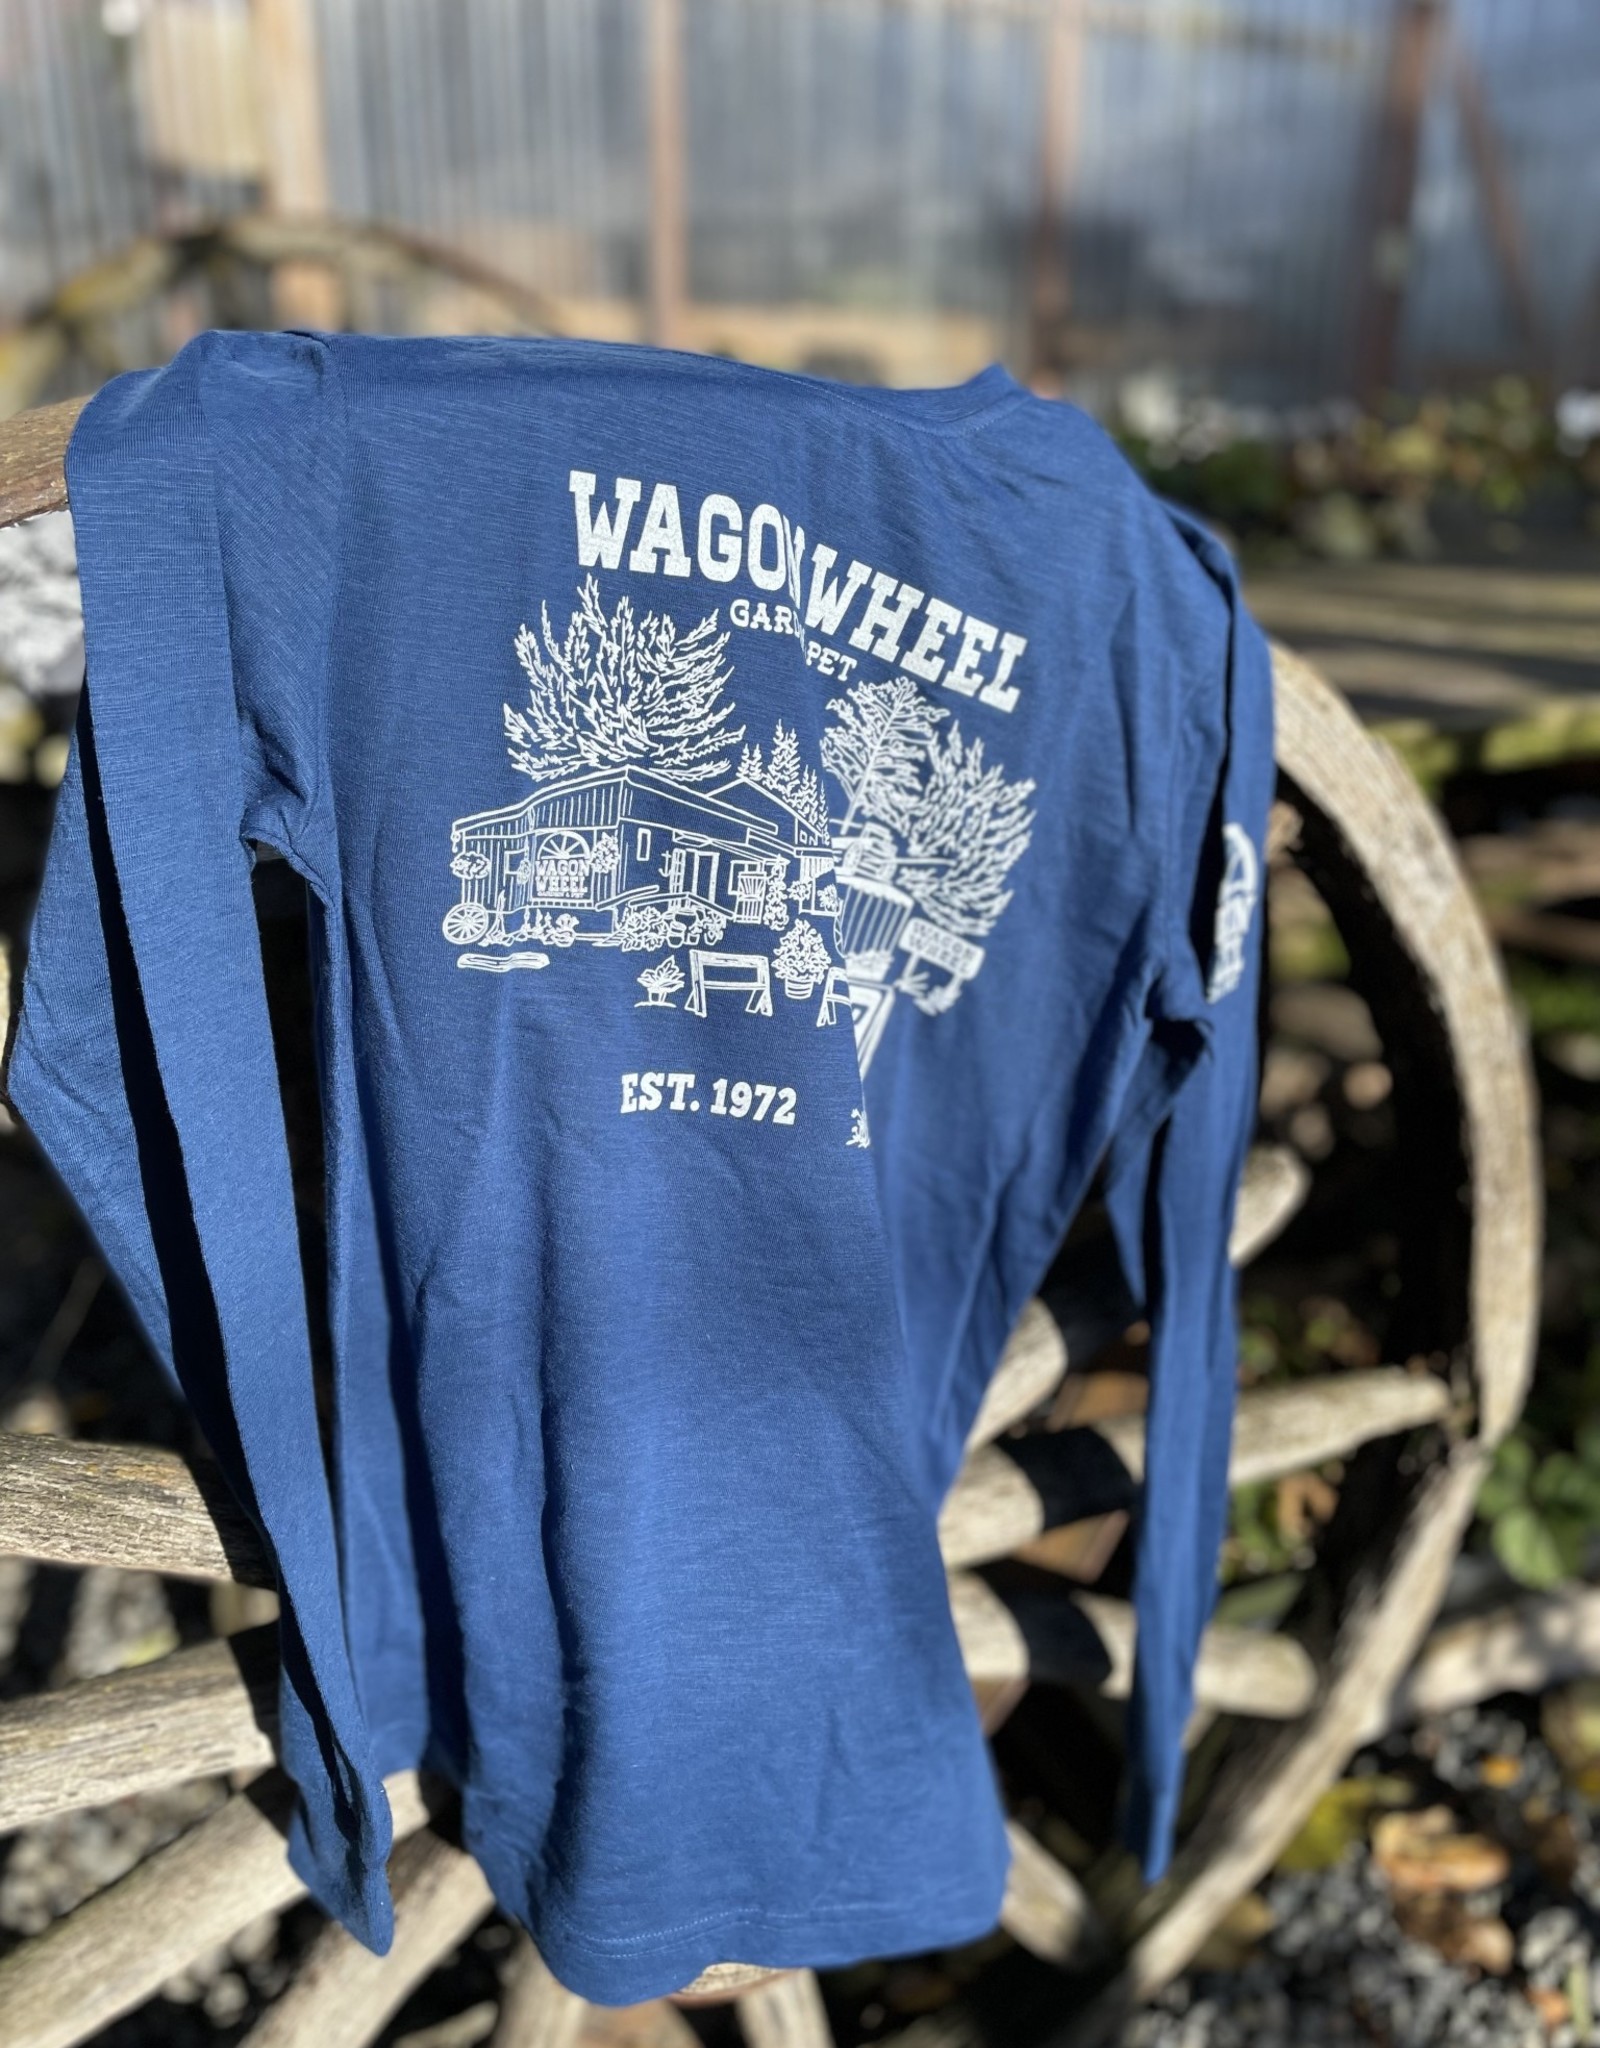 Wagon Wheel LS T-shirt